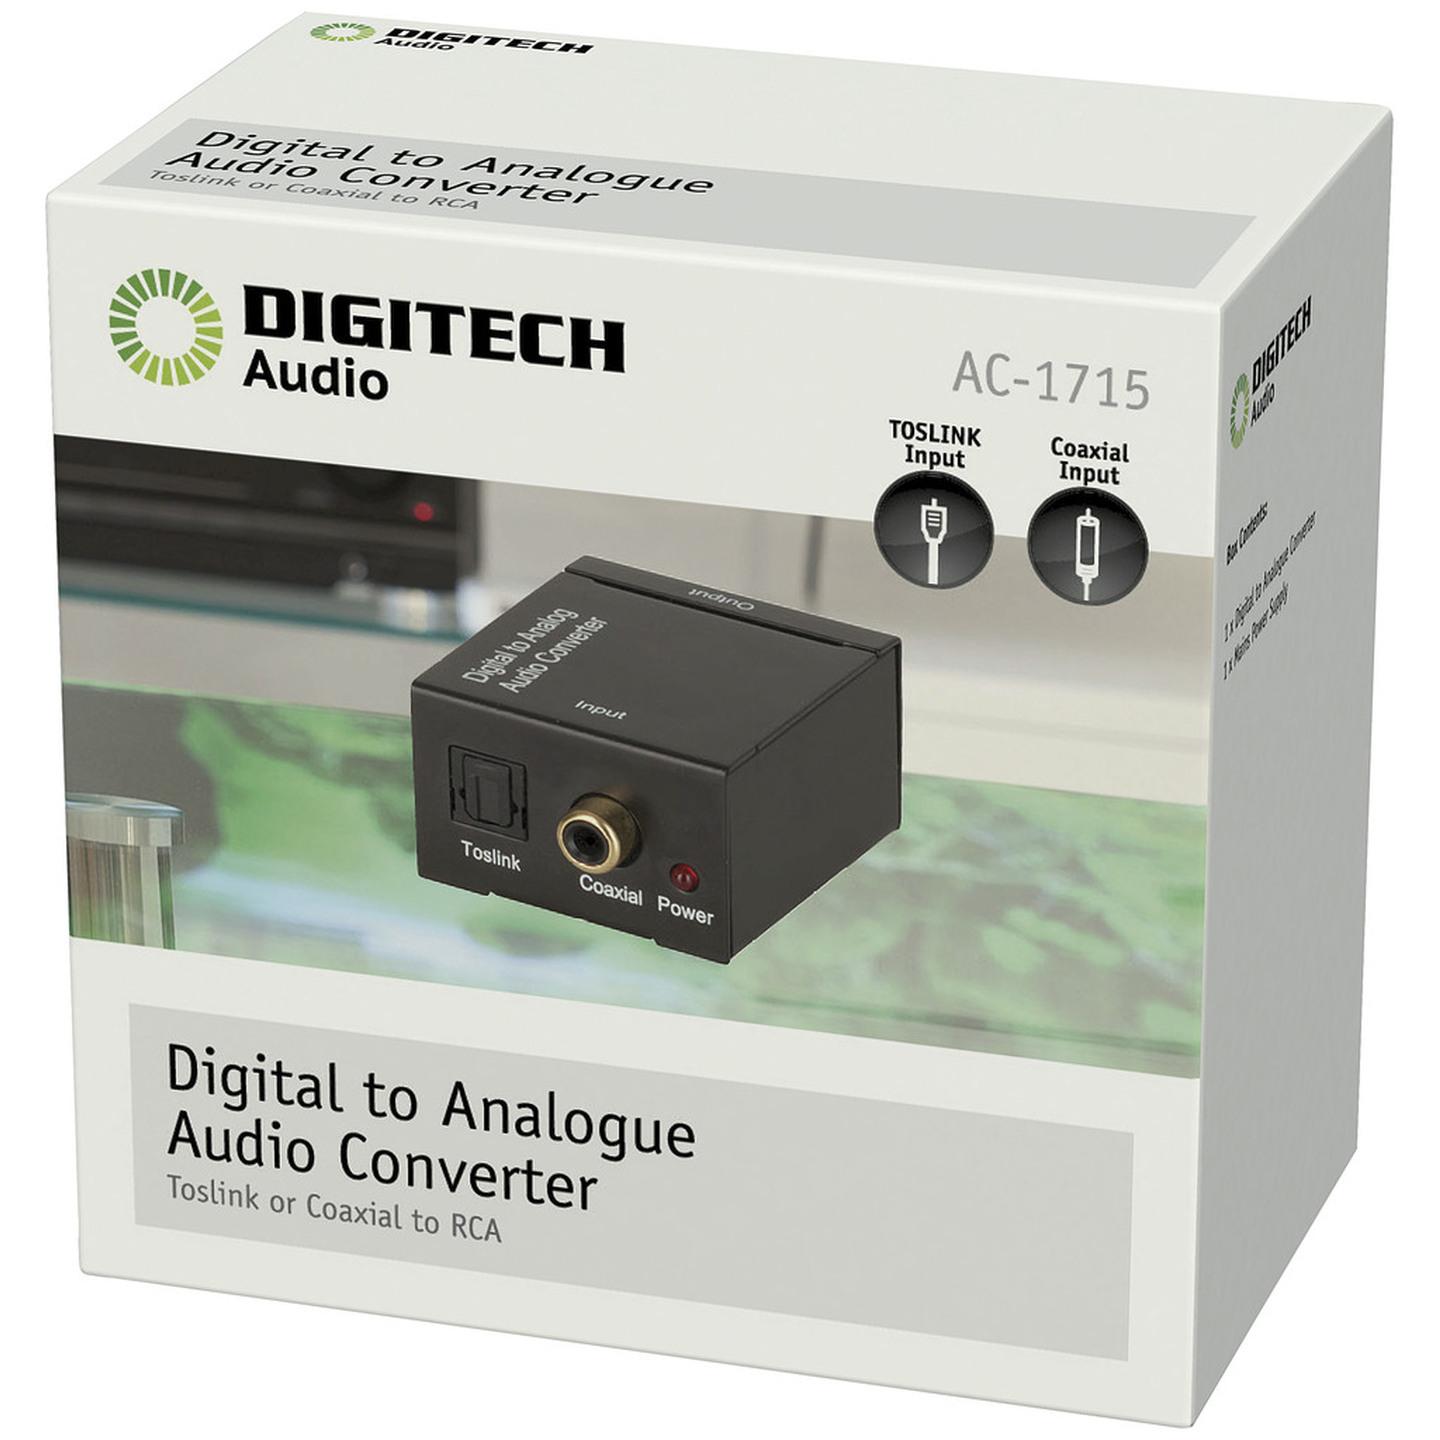 Digitech Digital to Analogue Audio Converter